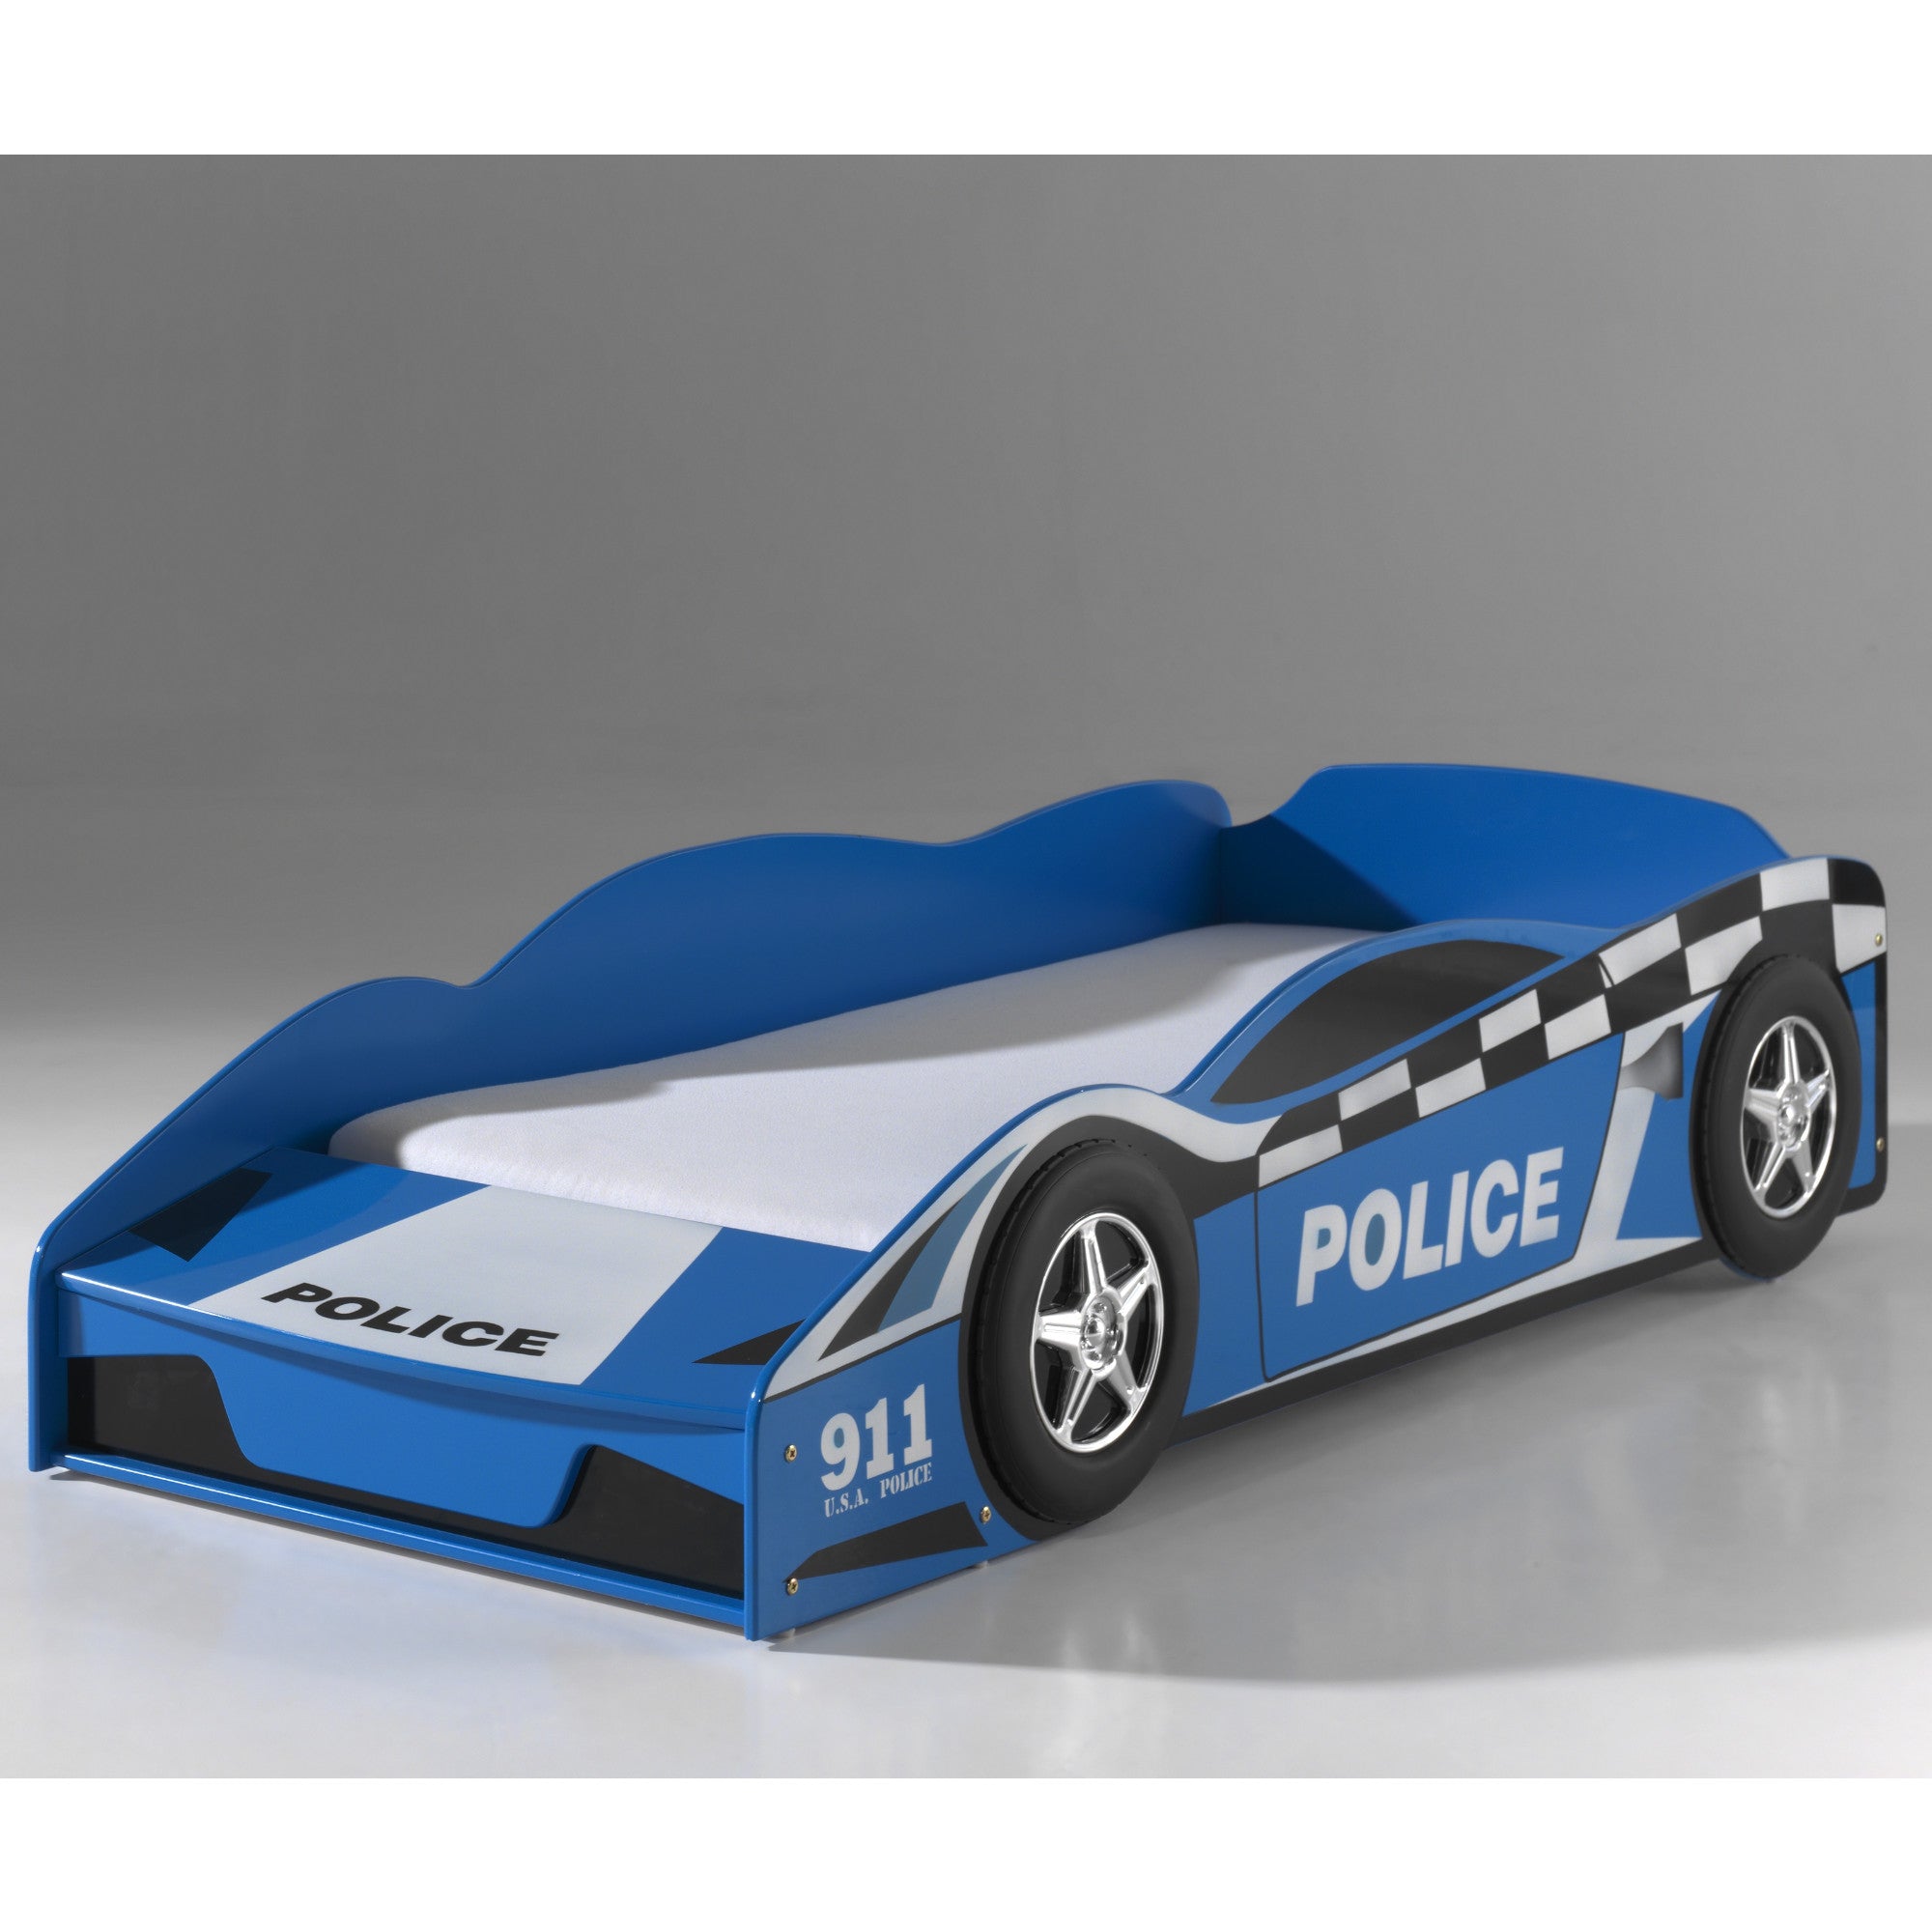 Autobett Carlos Vipack inklusive Lattenrost aus hochwertigem MDF Holz Polizei-Design blau 70*140 cm